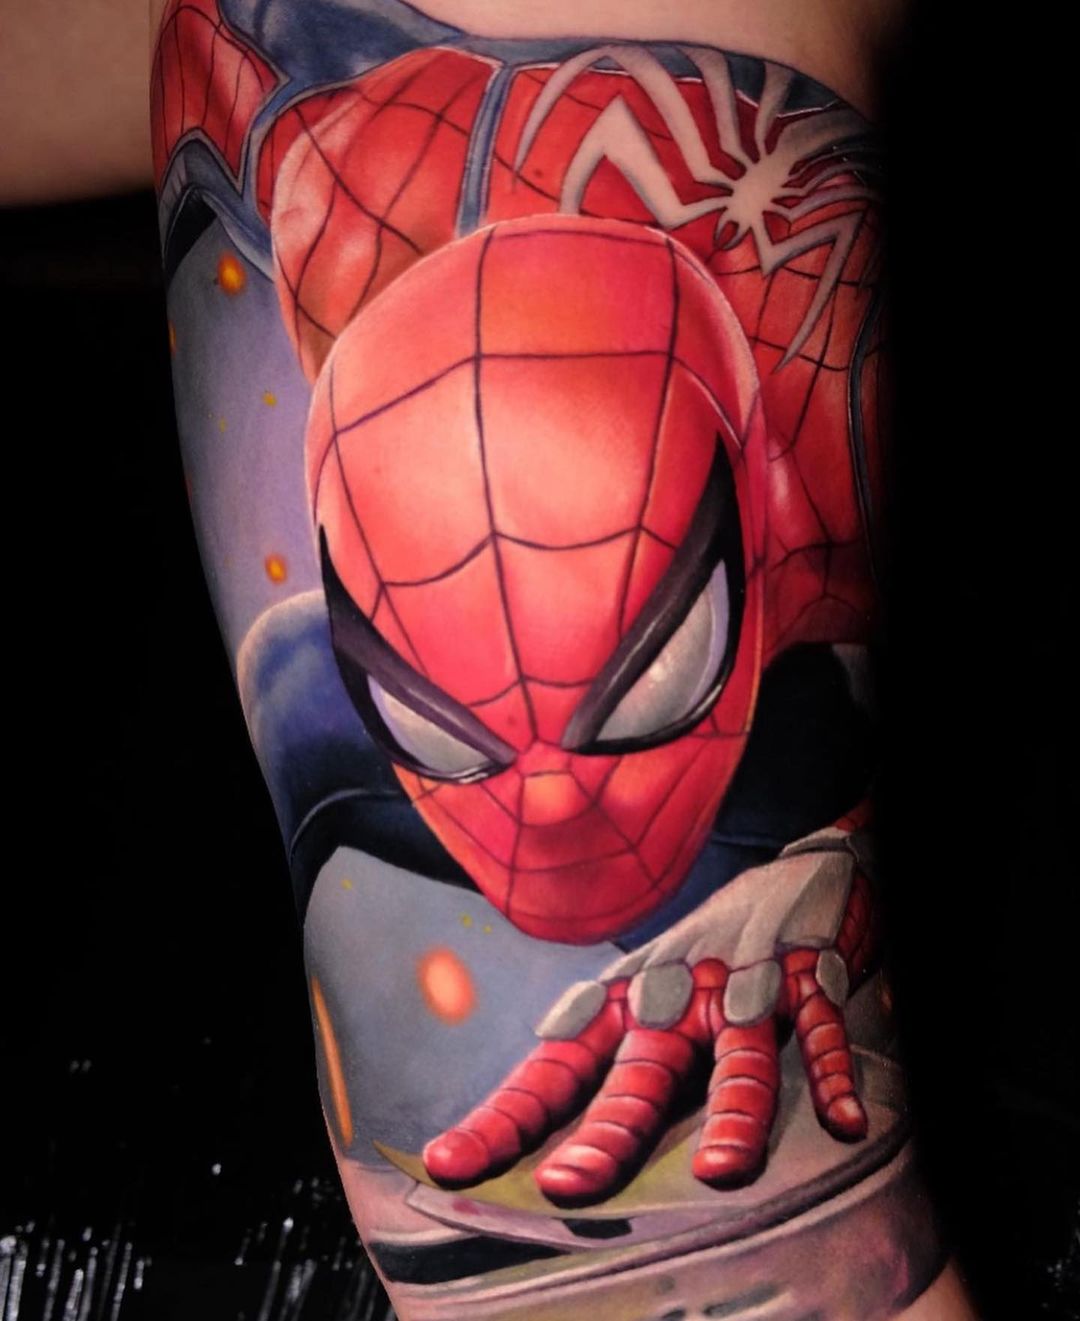 Fresh Spider-Man tattoo by Wyldish Bambino @ Bridge Street Tattoo, Chester.  : r/tattoos